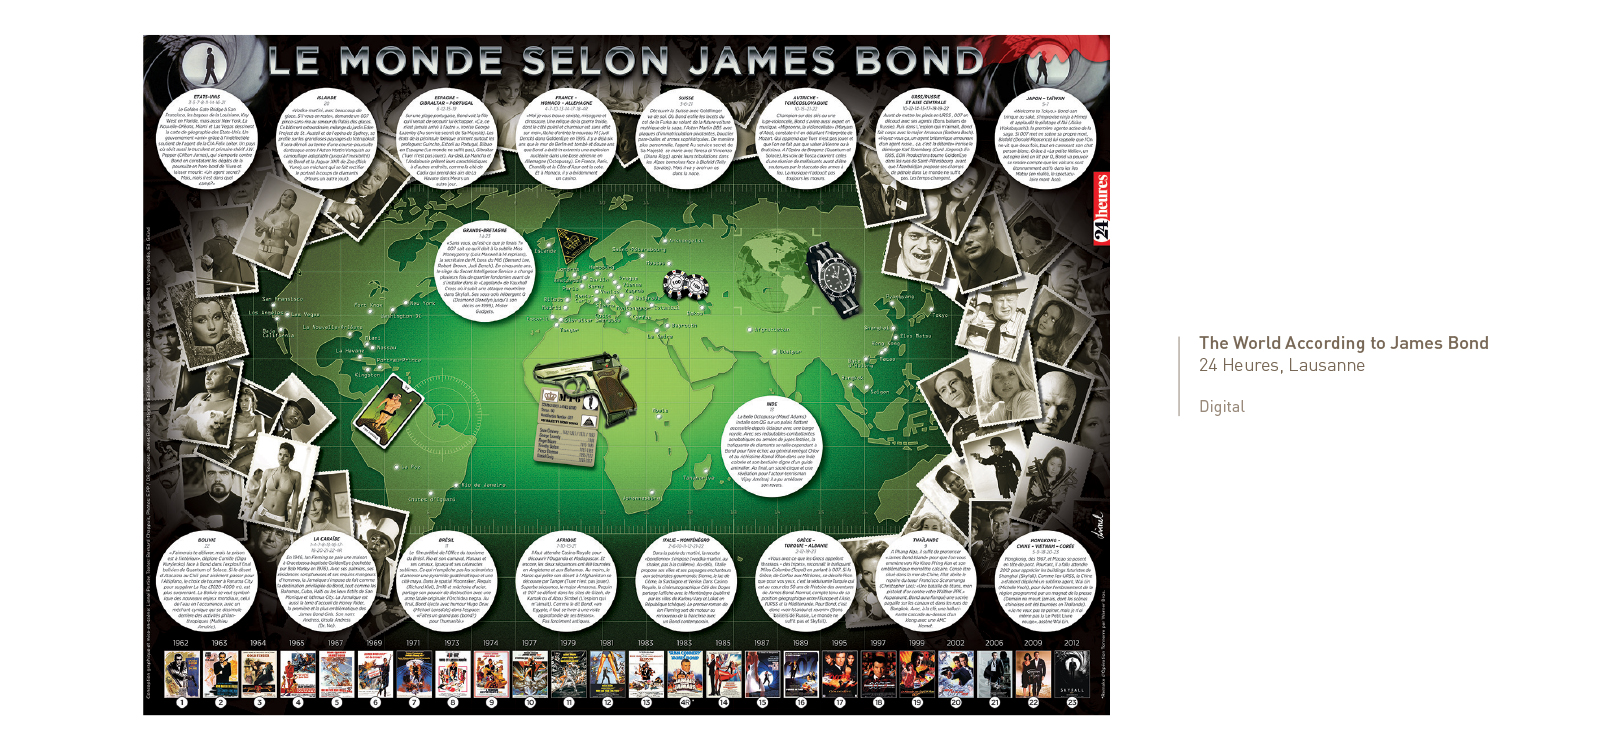 James Bond Map by Lione Portier